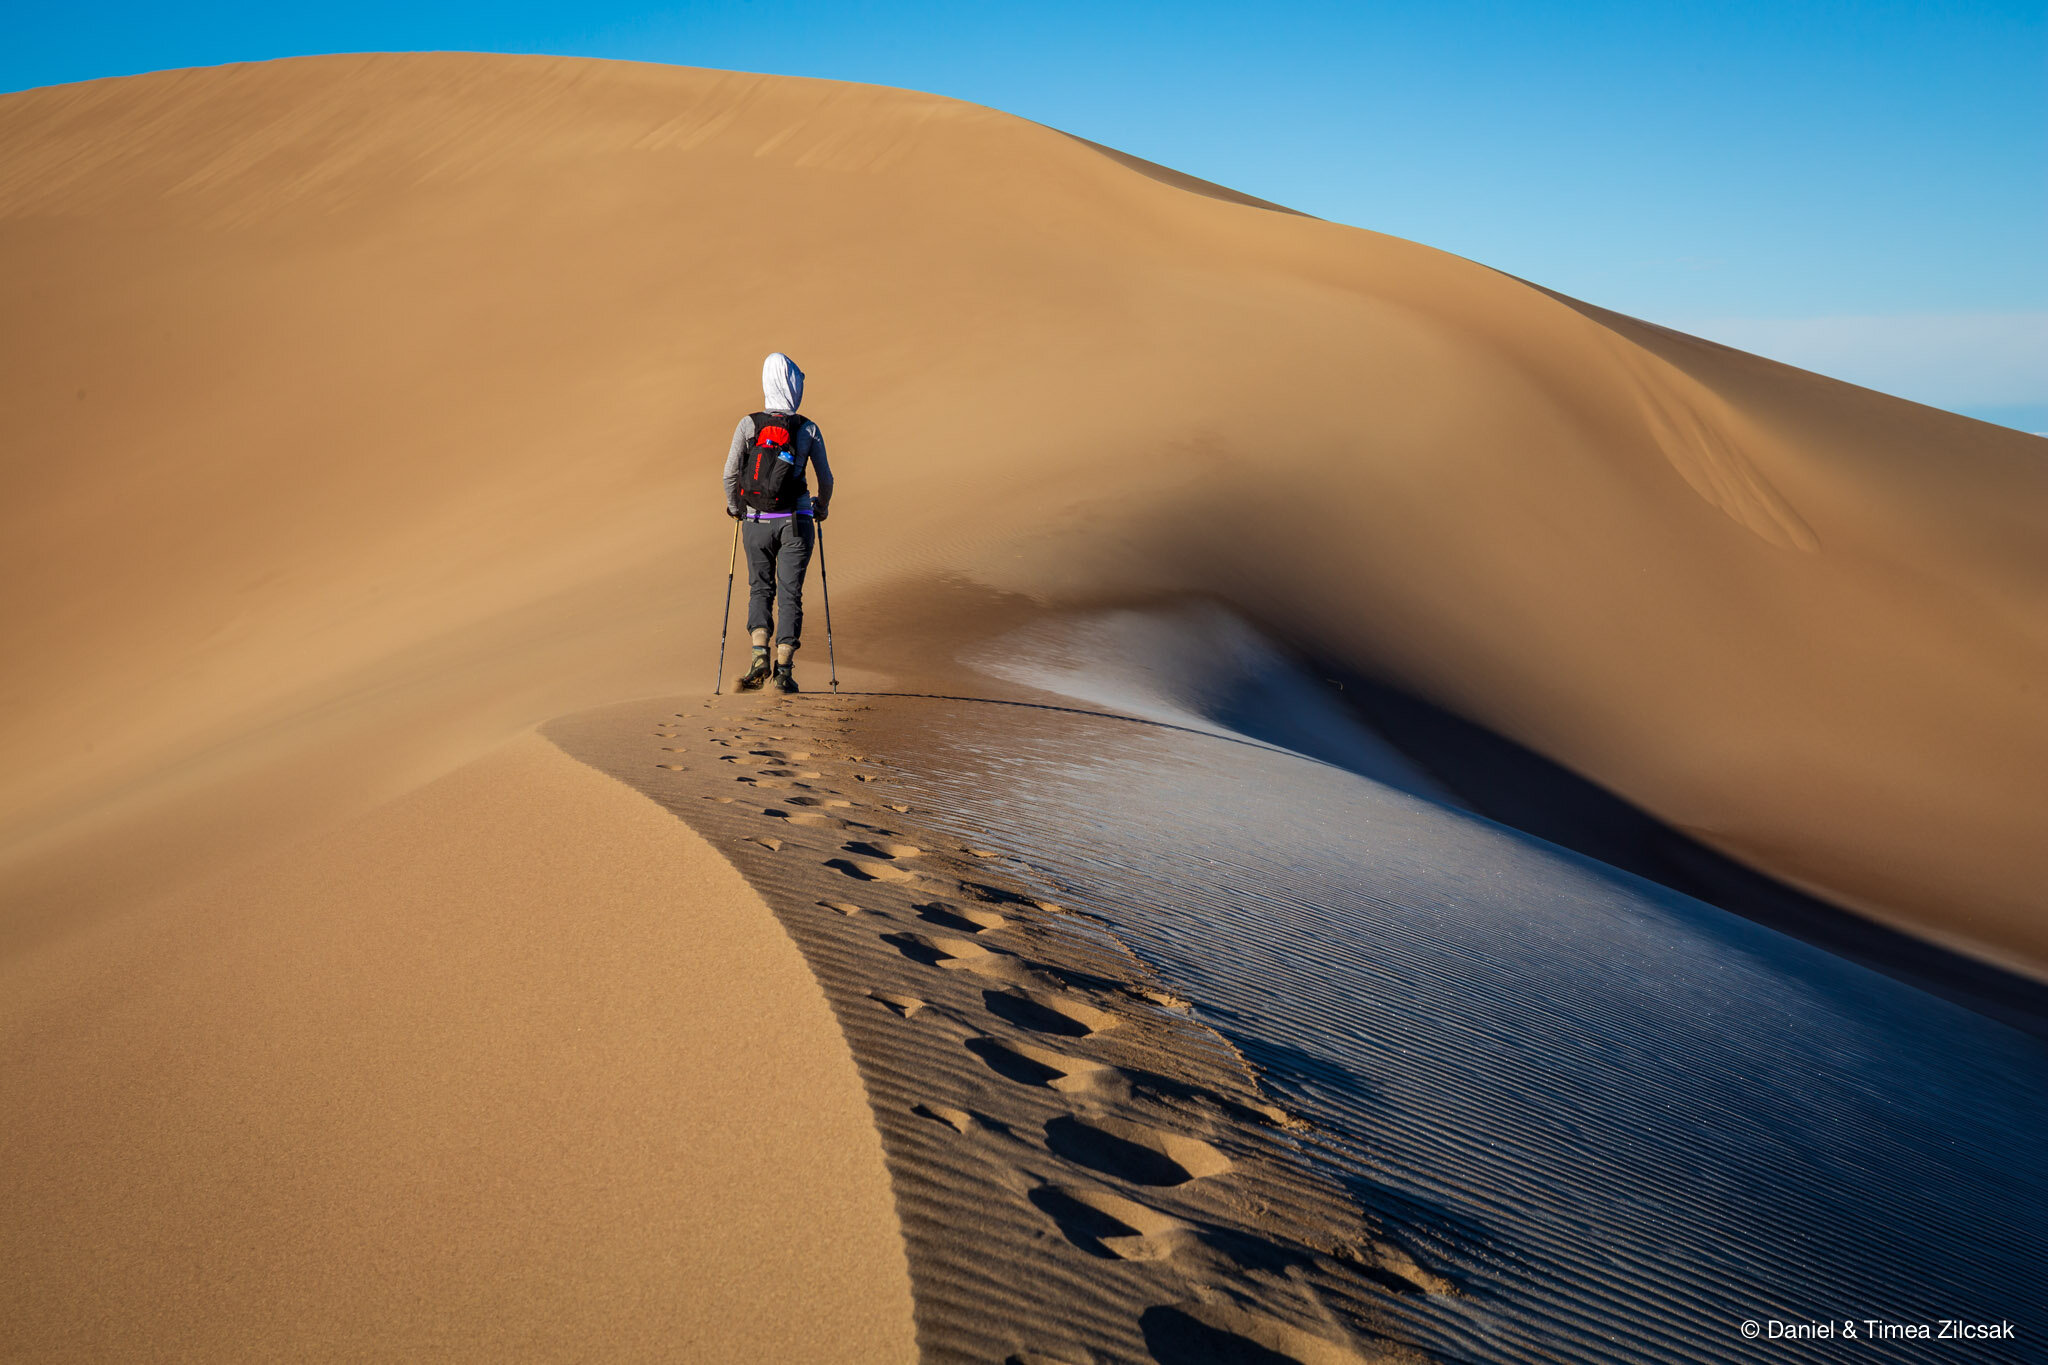 Great-Sand-Dunes-National-Park-9201.jpg